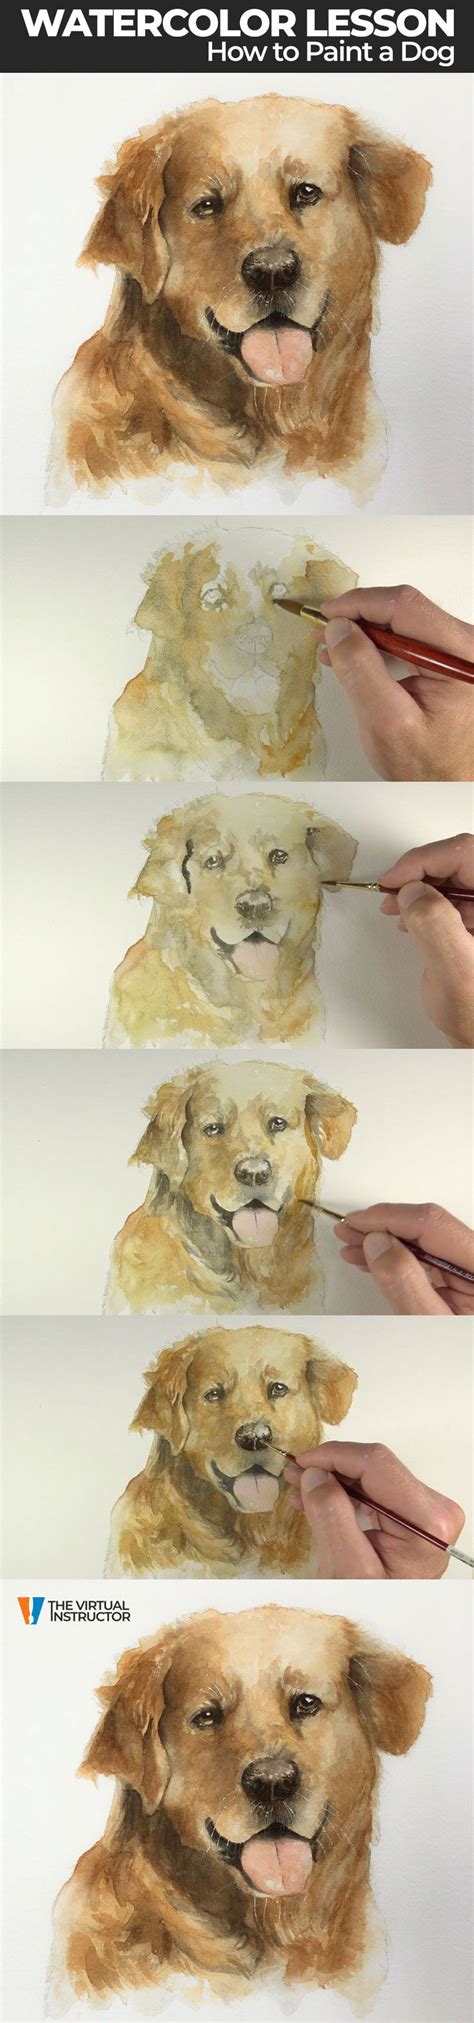 Watercolor Lesson How To Paint A Golden Retriever Dog Portraits